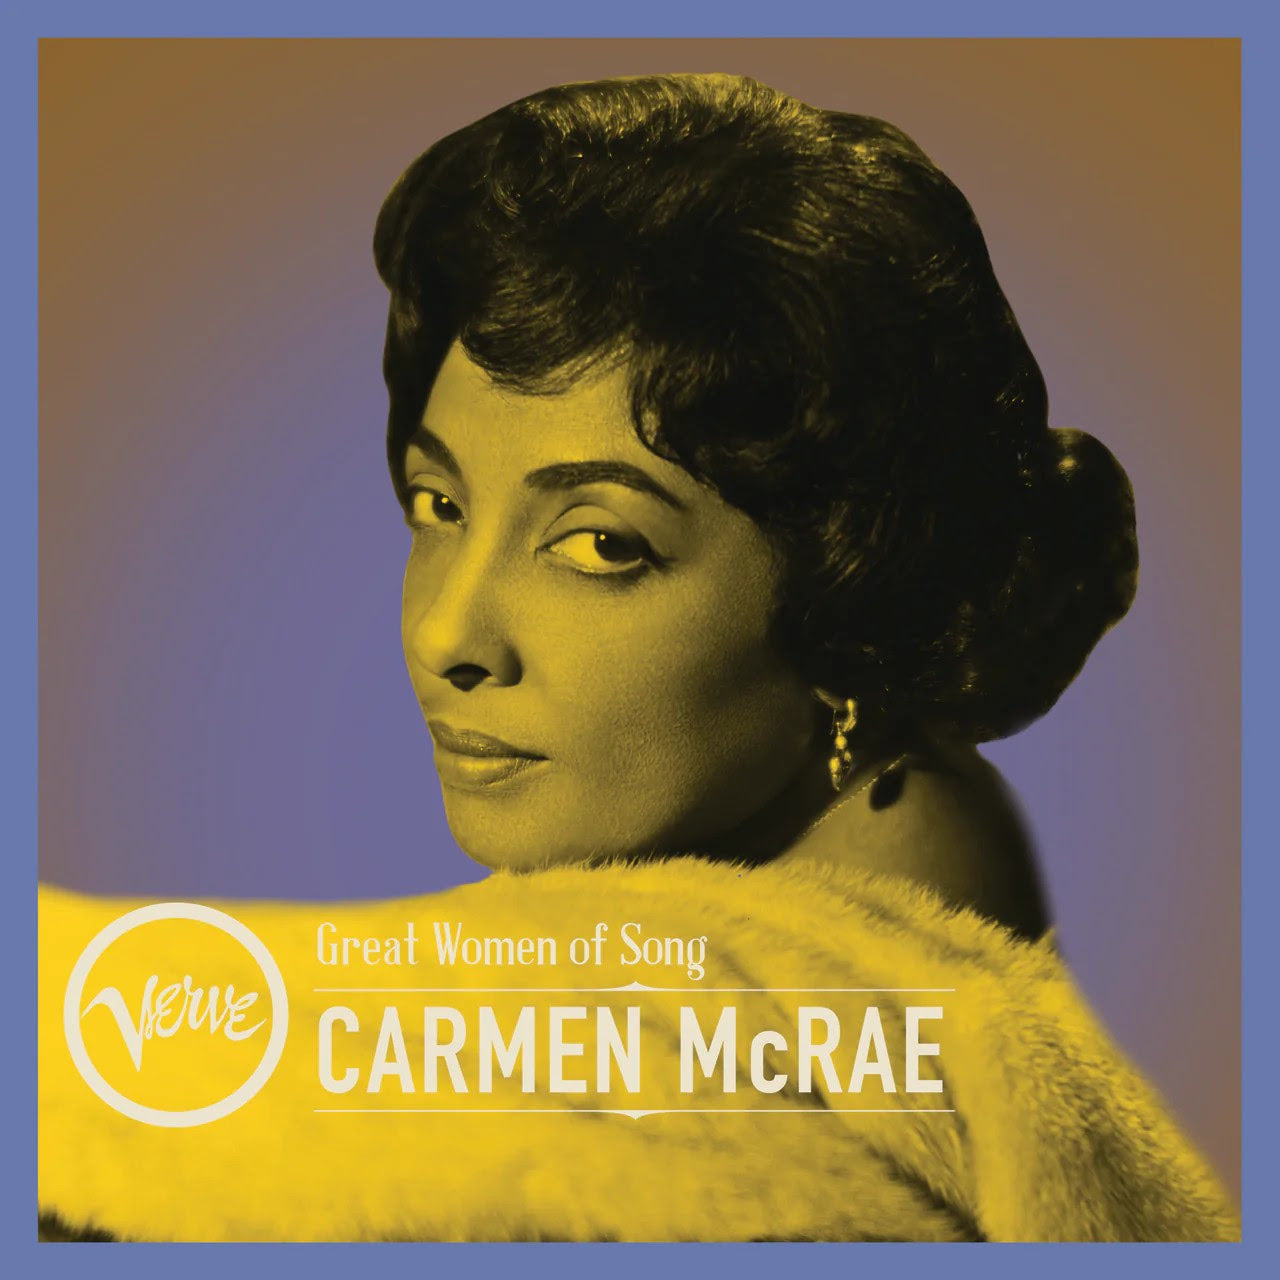 Carmen McRae - Great Women of Song | Buy the Vinyl LP from Flying Nun Records